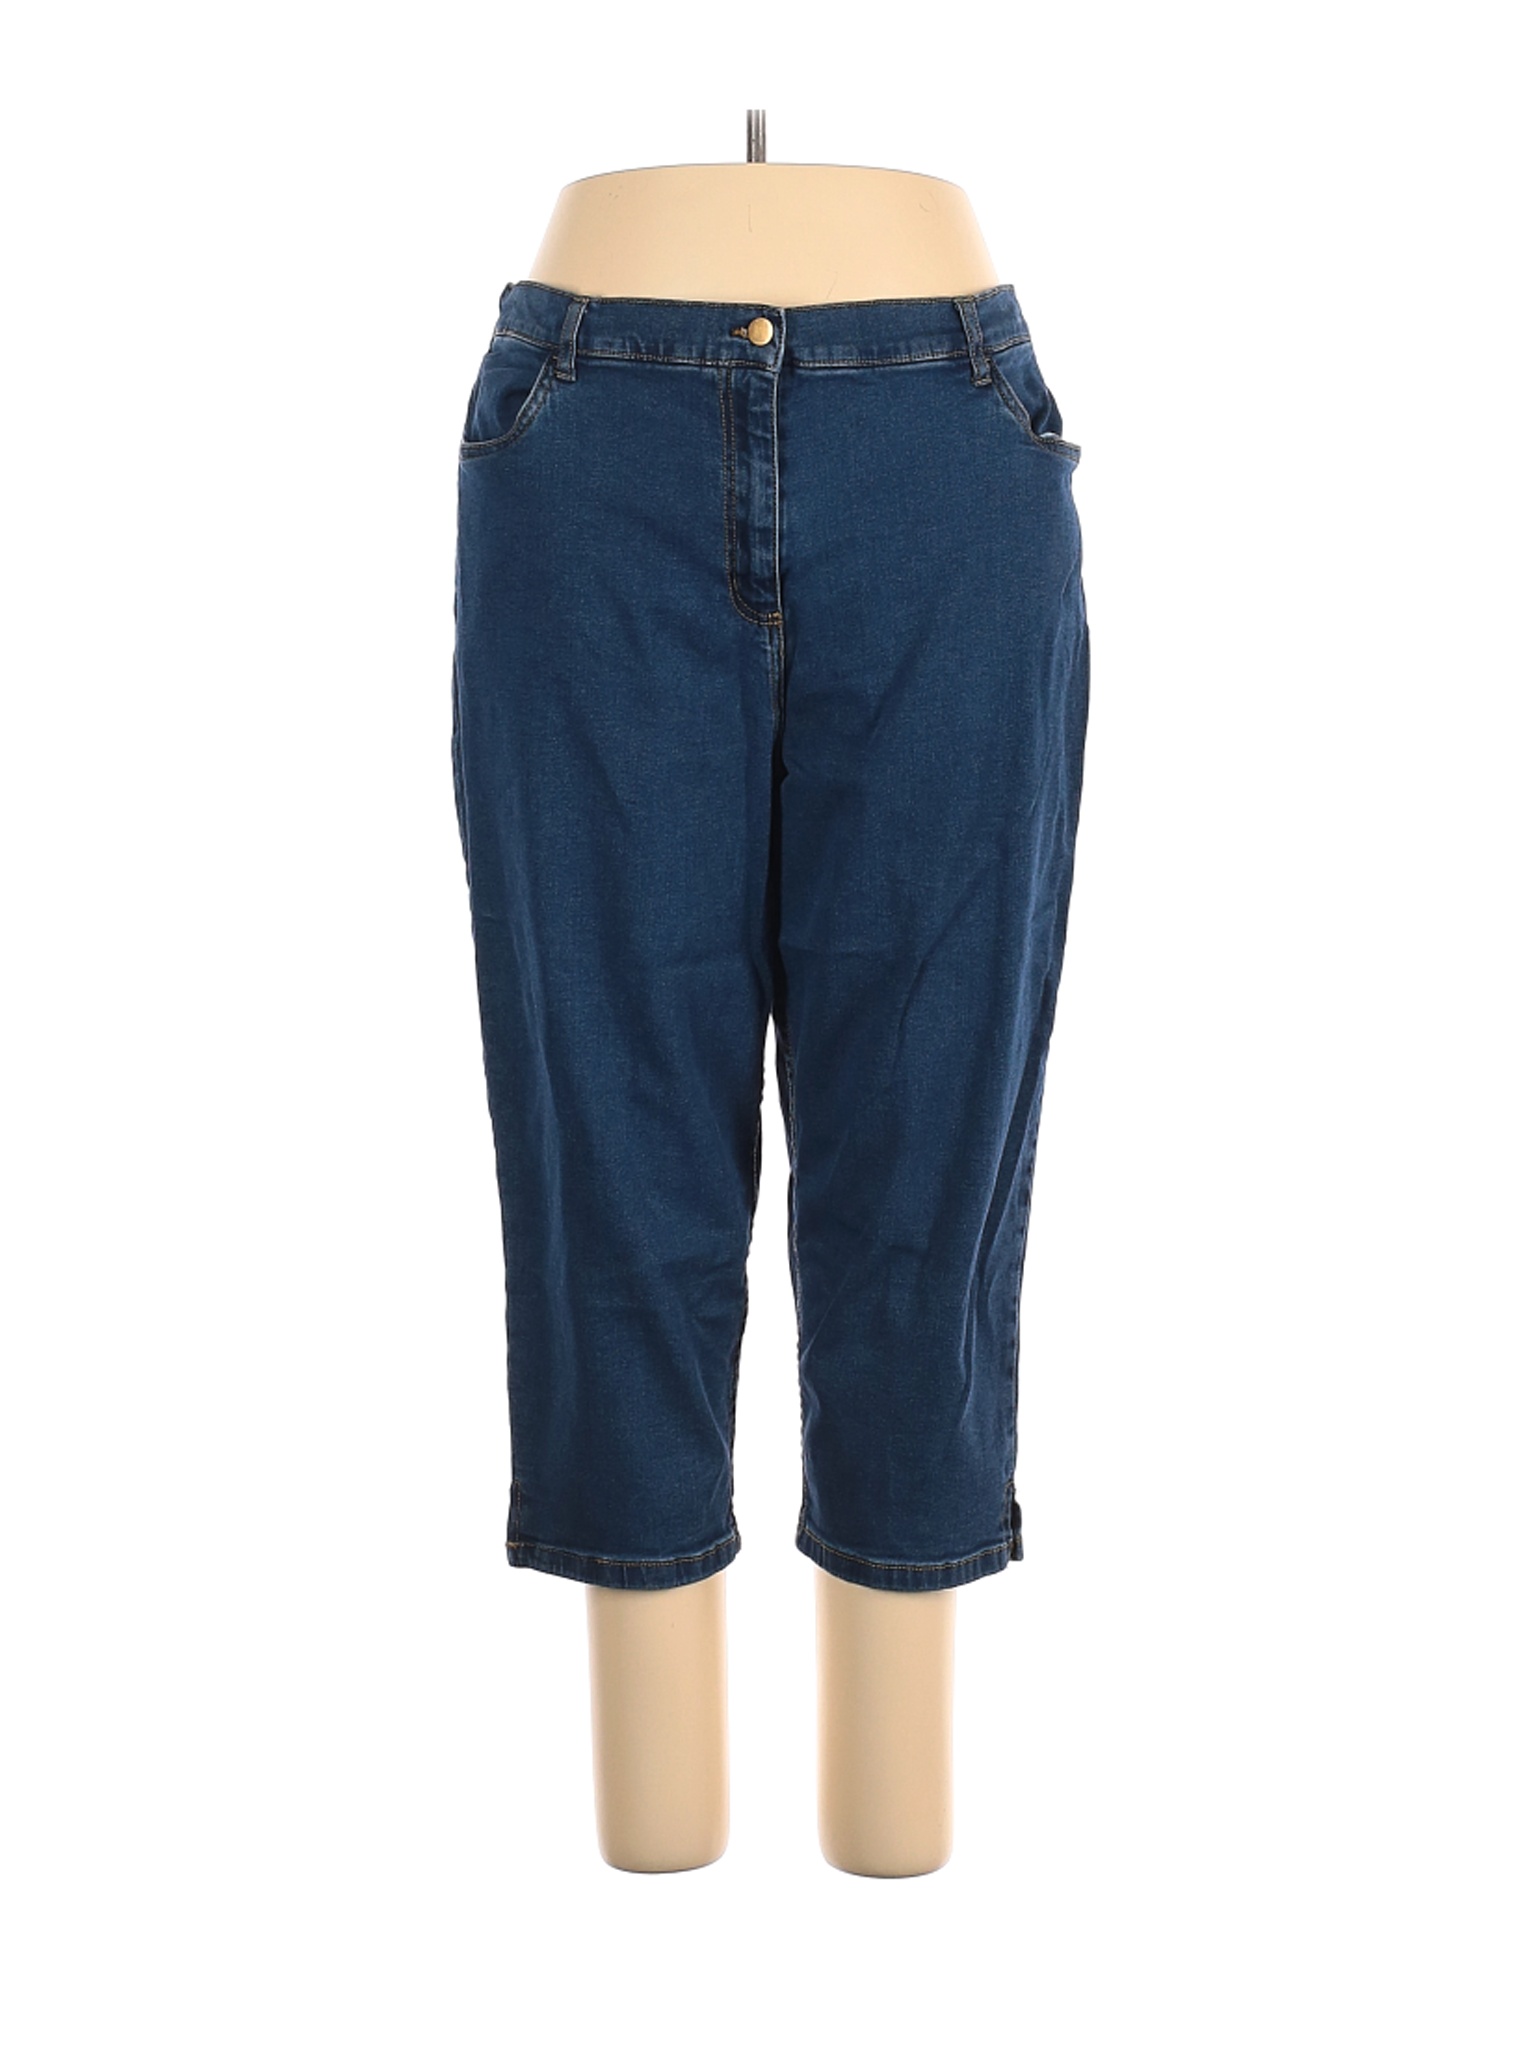 Blair Women Blue Jeans 18 Plus | eBay